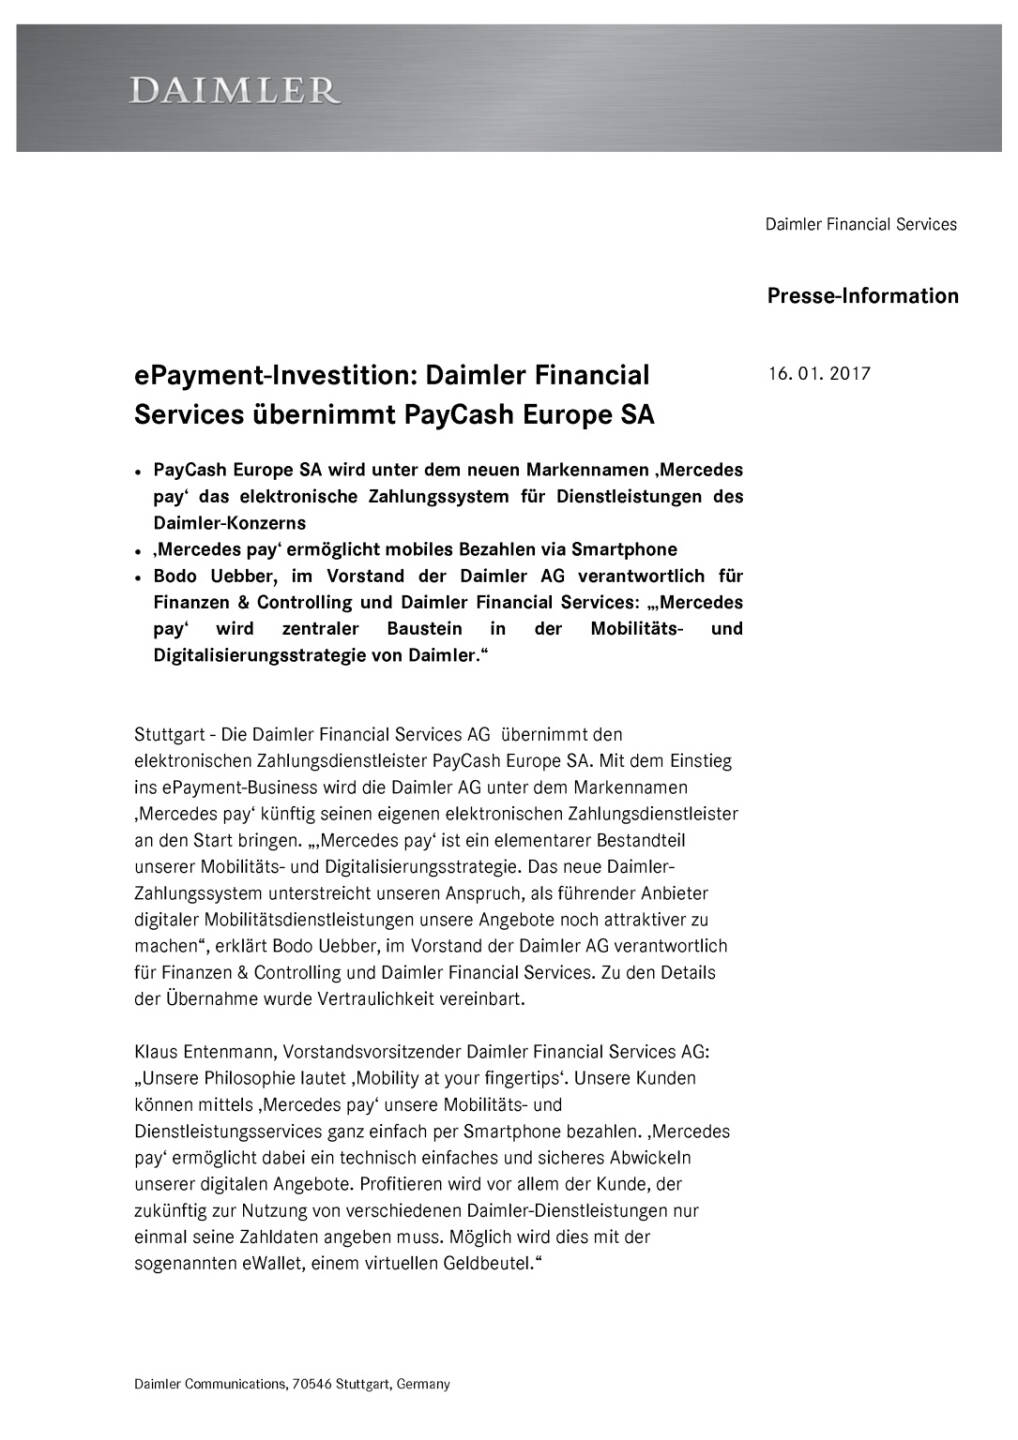 Daimler Financial Services übernimmt PayCash Europe SA, Seite 1/2, komplettes Dokument unter http://boerse-social.com/static/uploads/file_2061_daimler_financial_services_ubernimmt_paycash_europe_sa.pdf